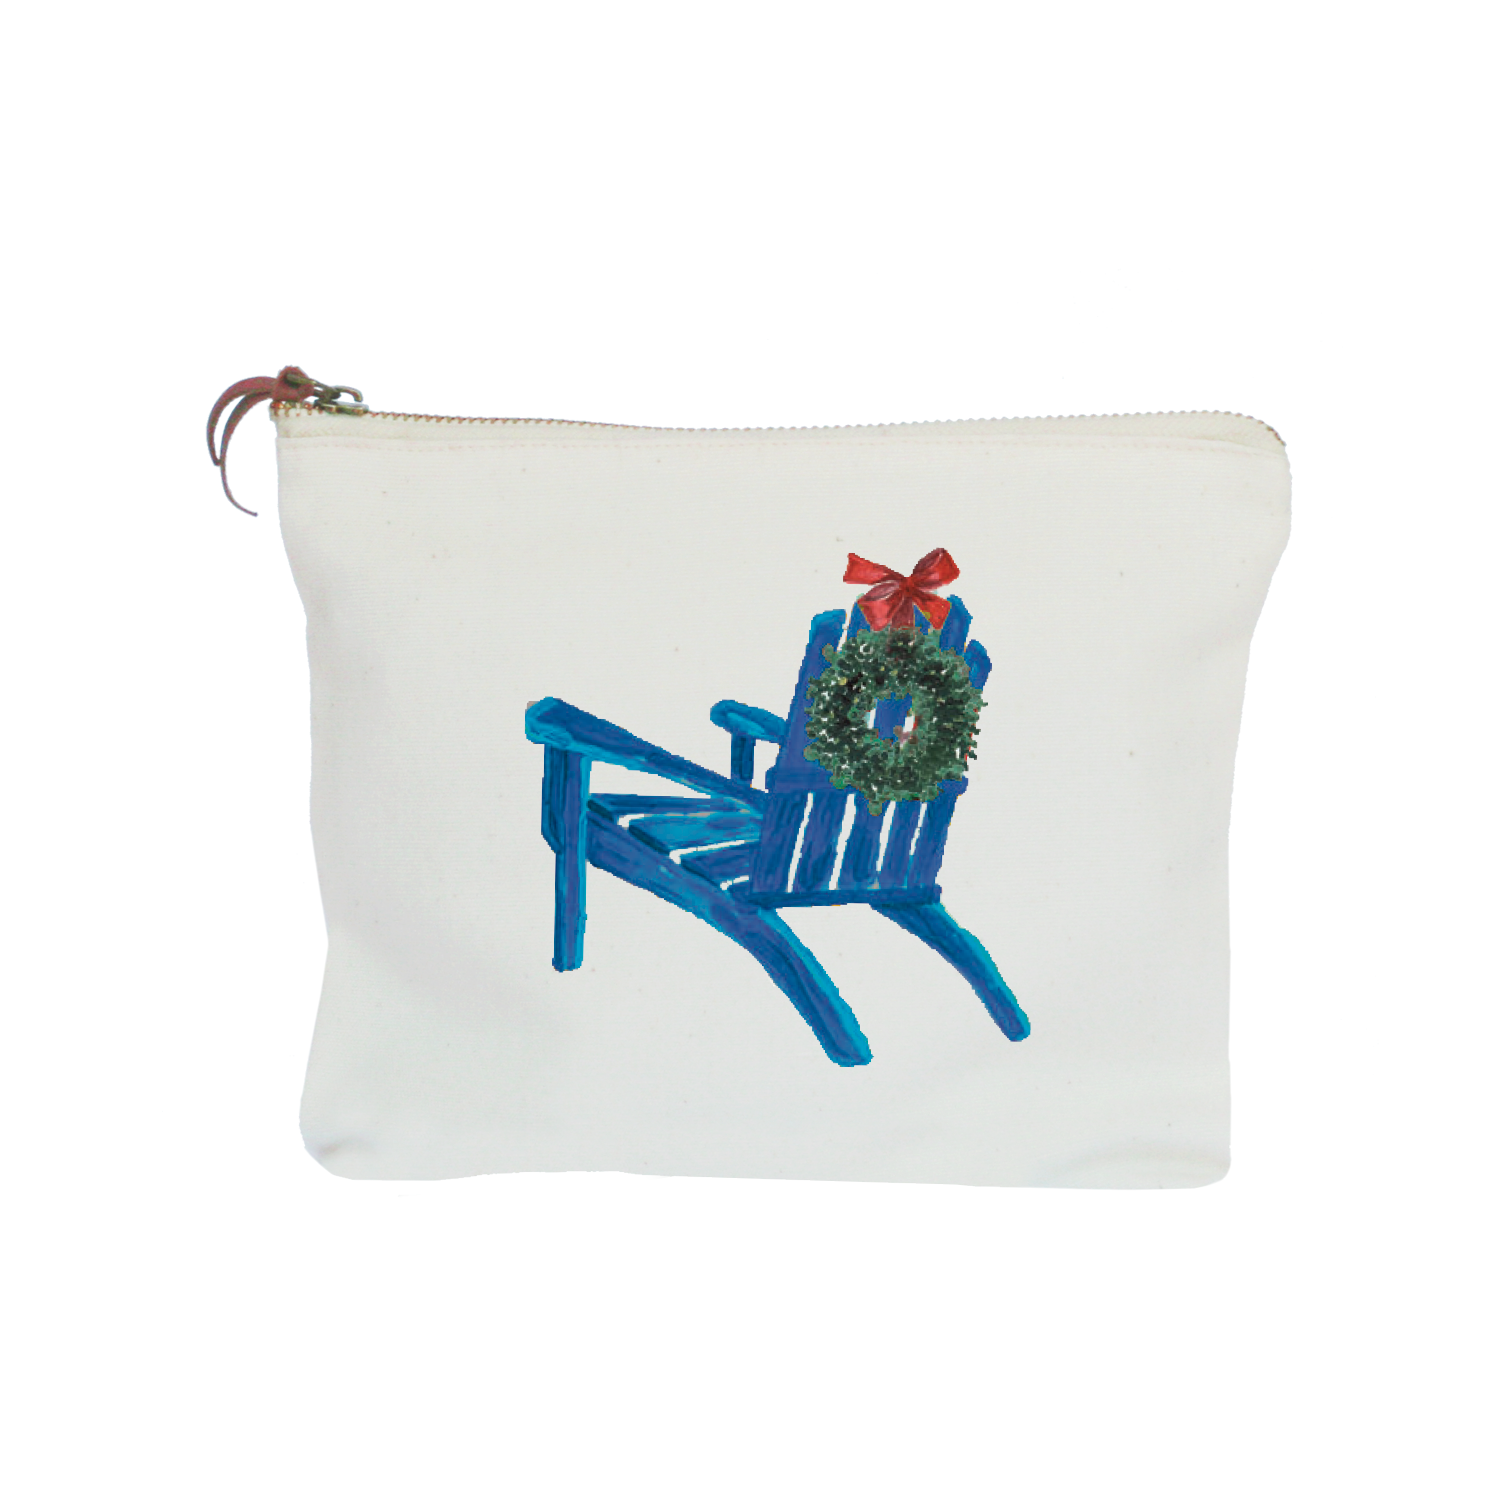 blue chair and wreath zipper pouch